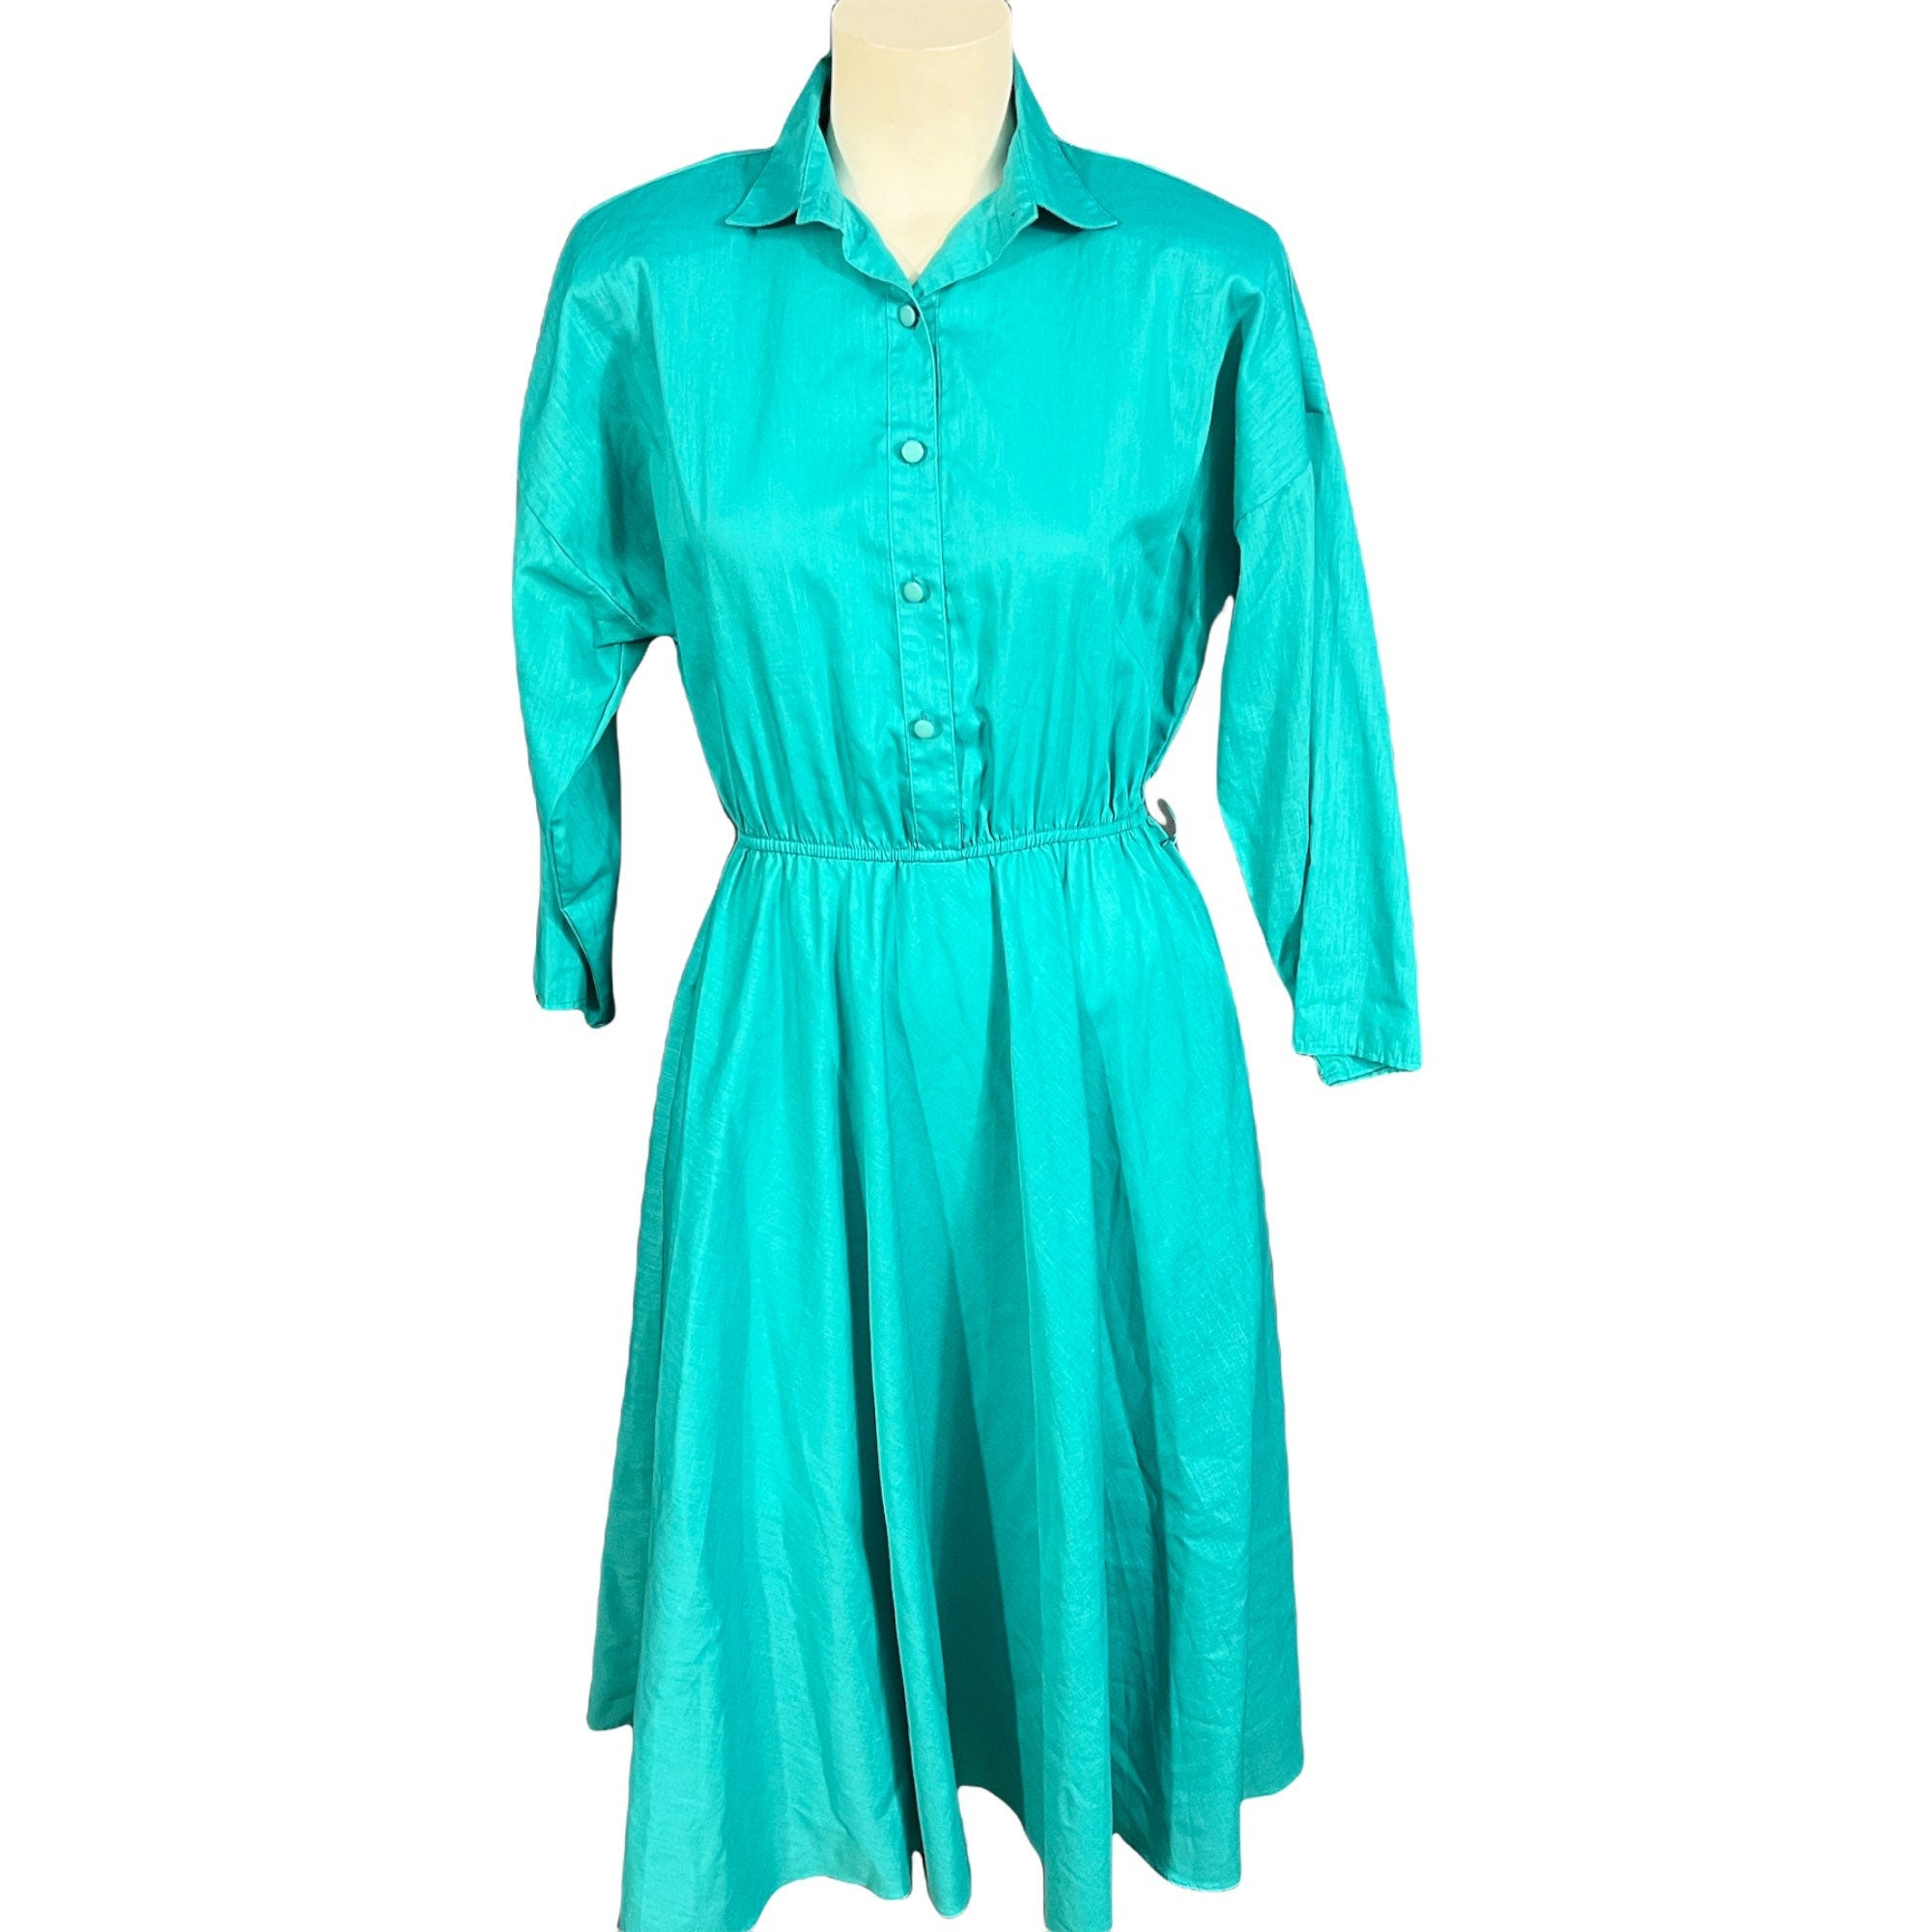 Vintage 80's The American Shirt Dress 5/6 S M